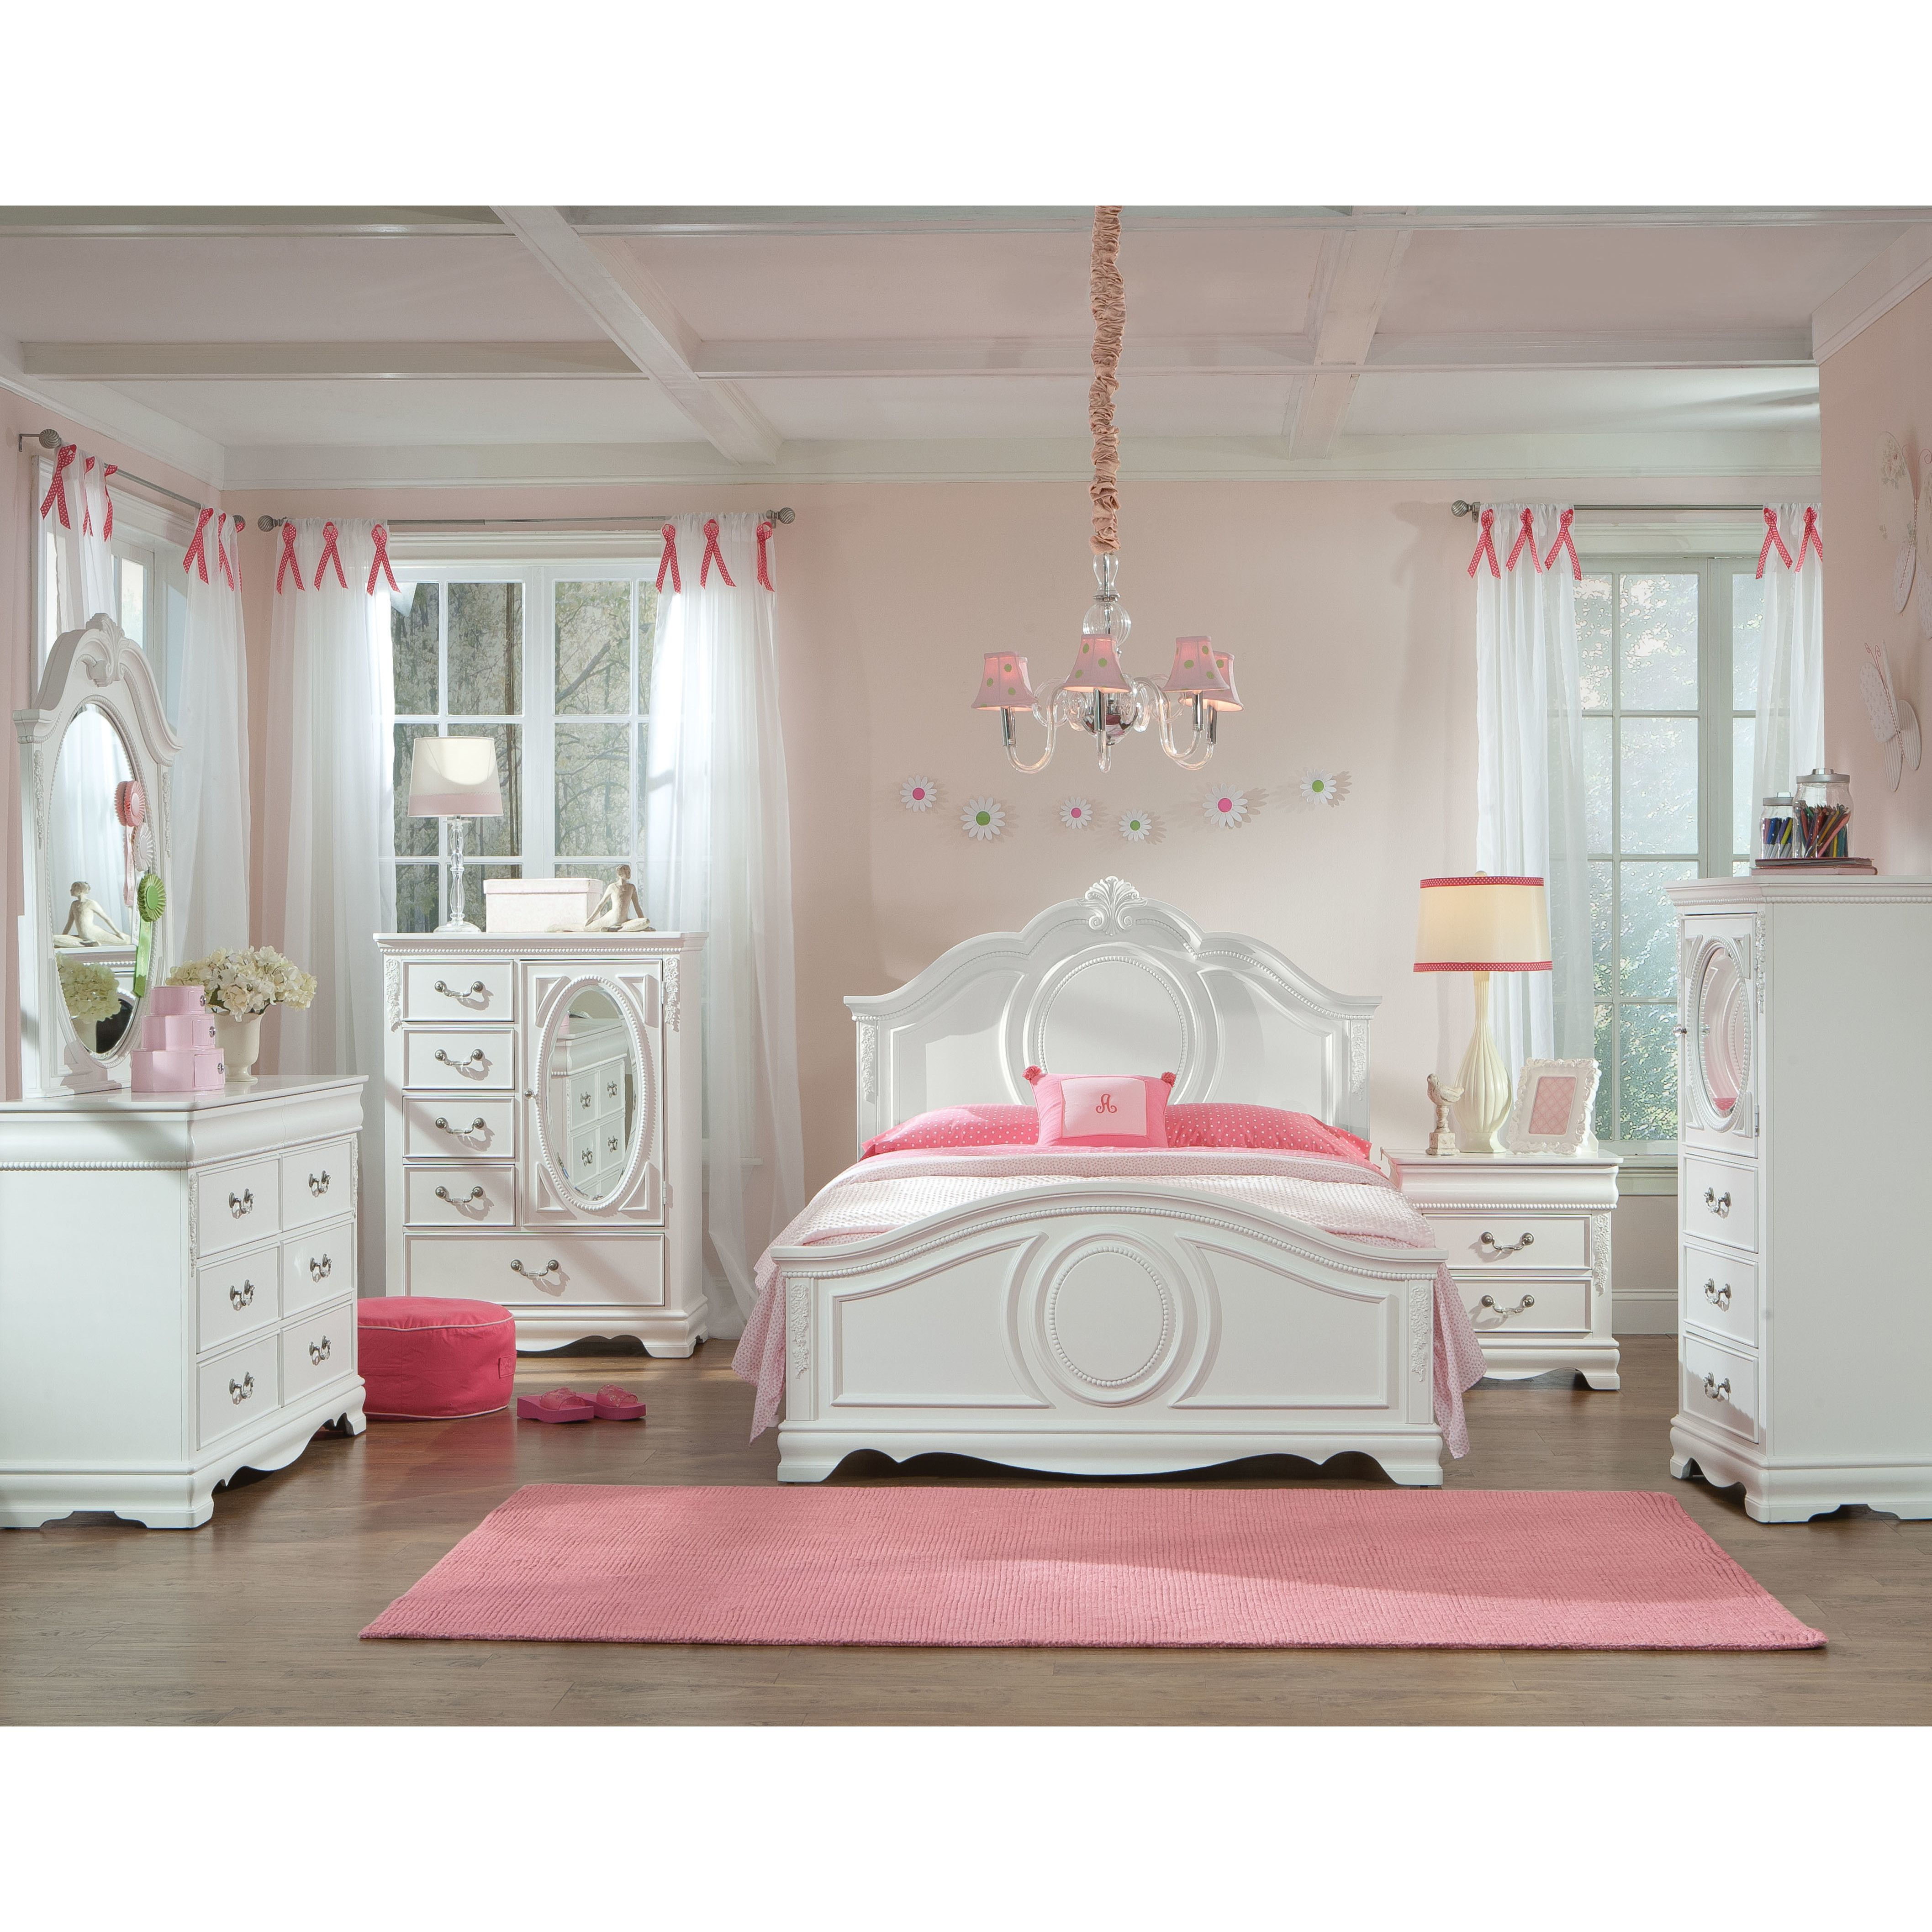 Standard Furniture Jessica Panel Customizable Bedroom Set Ideas inside measurements 4230 X 4230